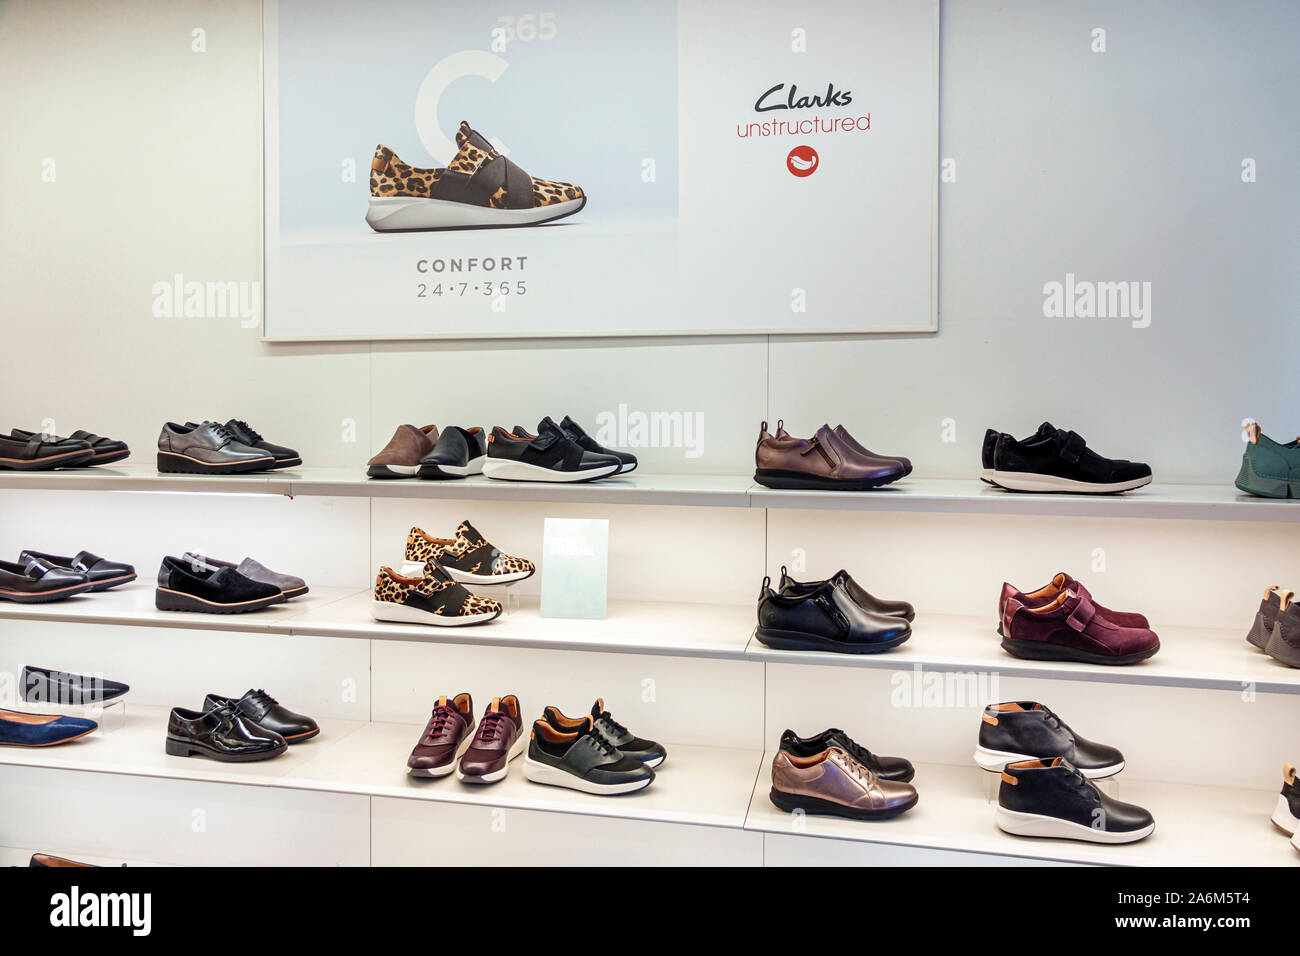 Shoes store spain fotografías e imágenes de alta resolución - Alamy